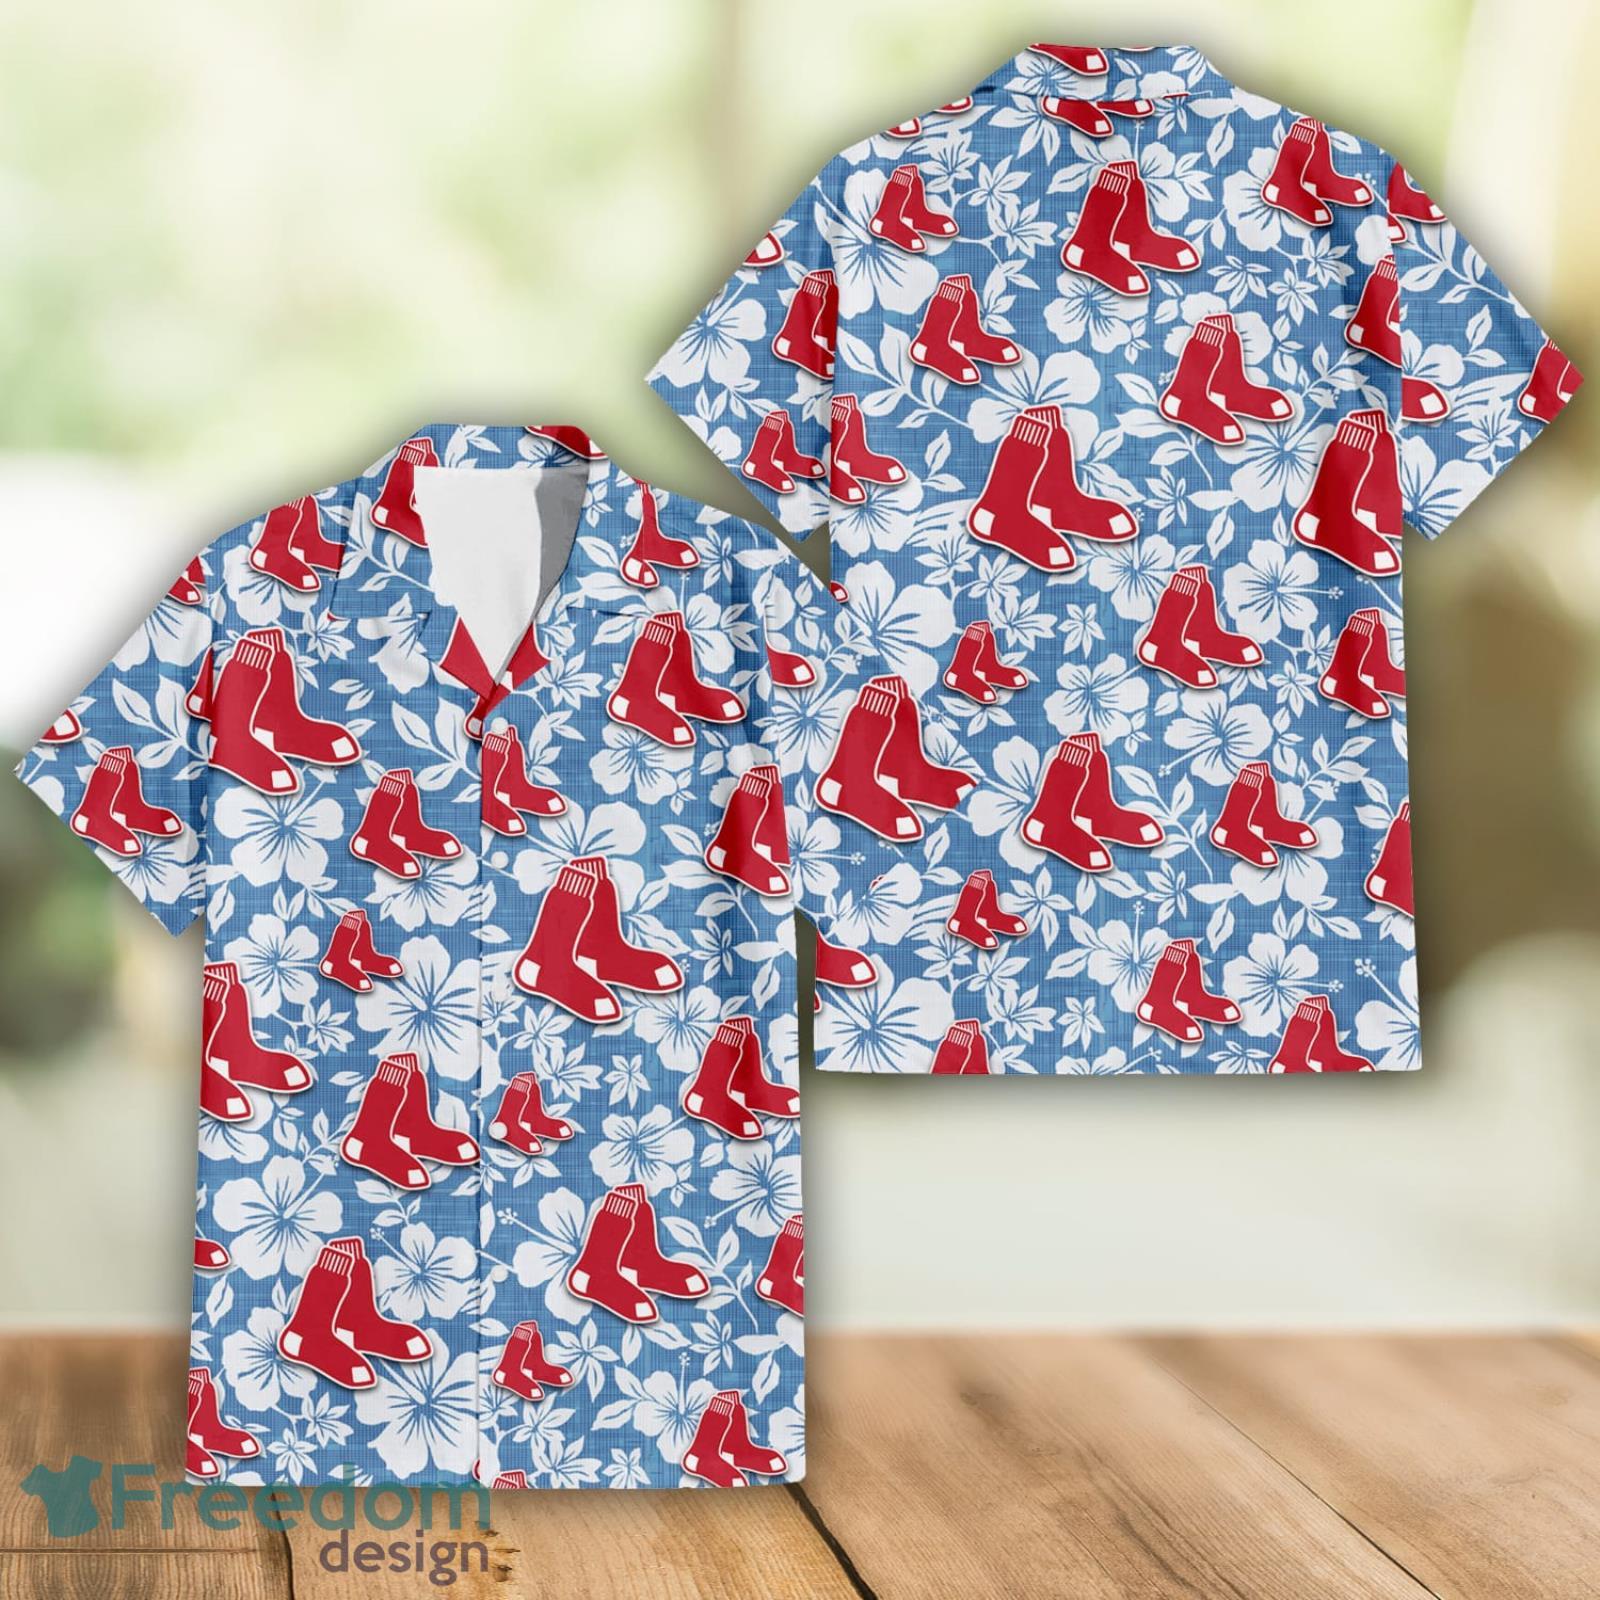 Chicago White Sox Team Lover Hibiscus Light Blue Aloha Hawaiian Shirt -  Freedomdesign